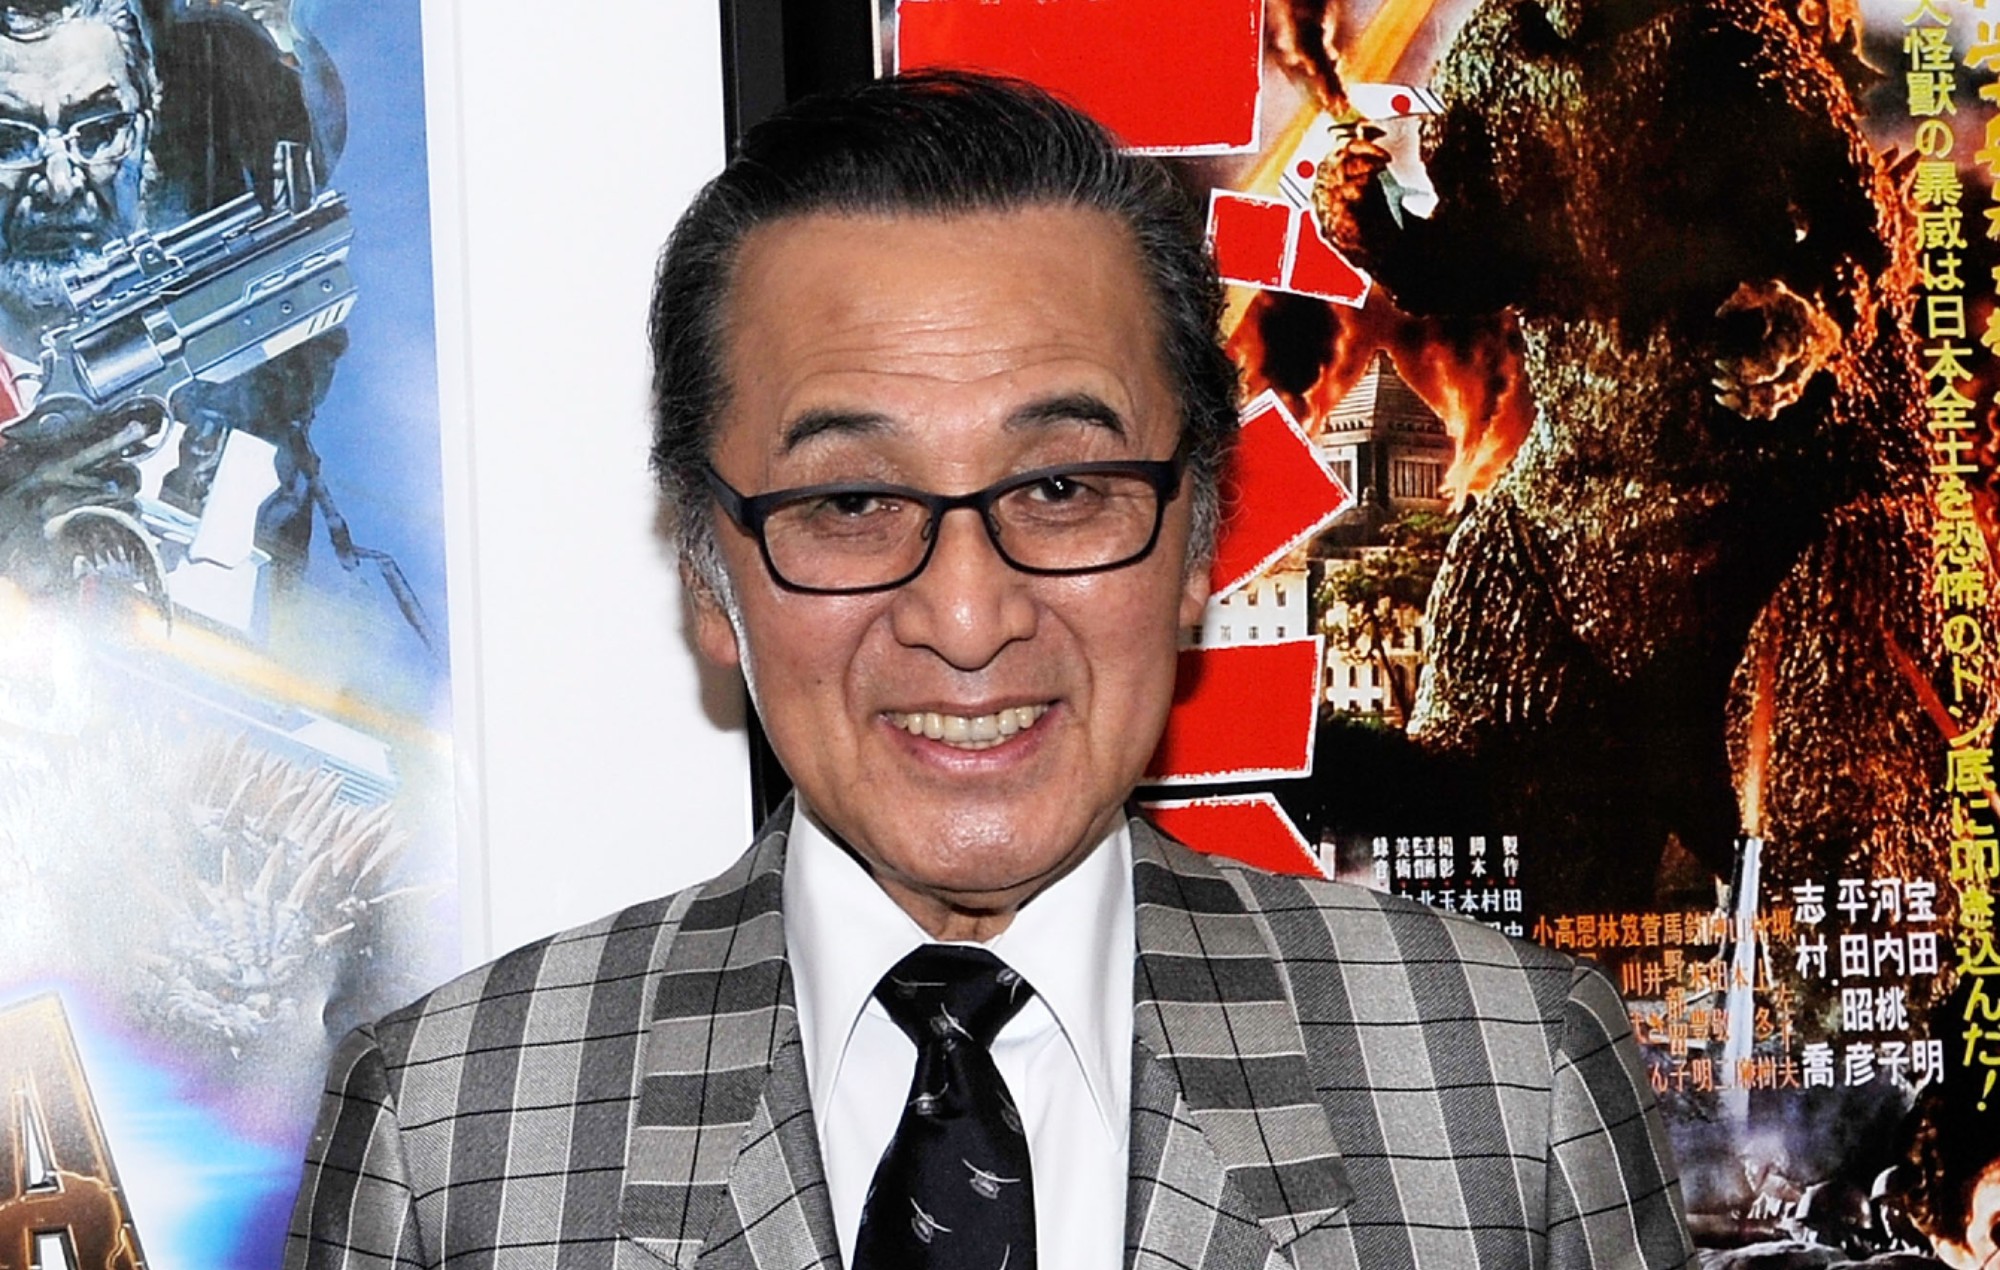 Muere la estrella original de "Godzilla", Akira Takarada, a los 87 años